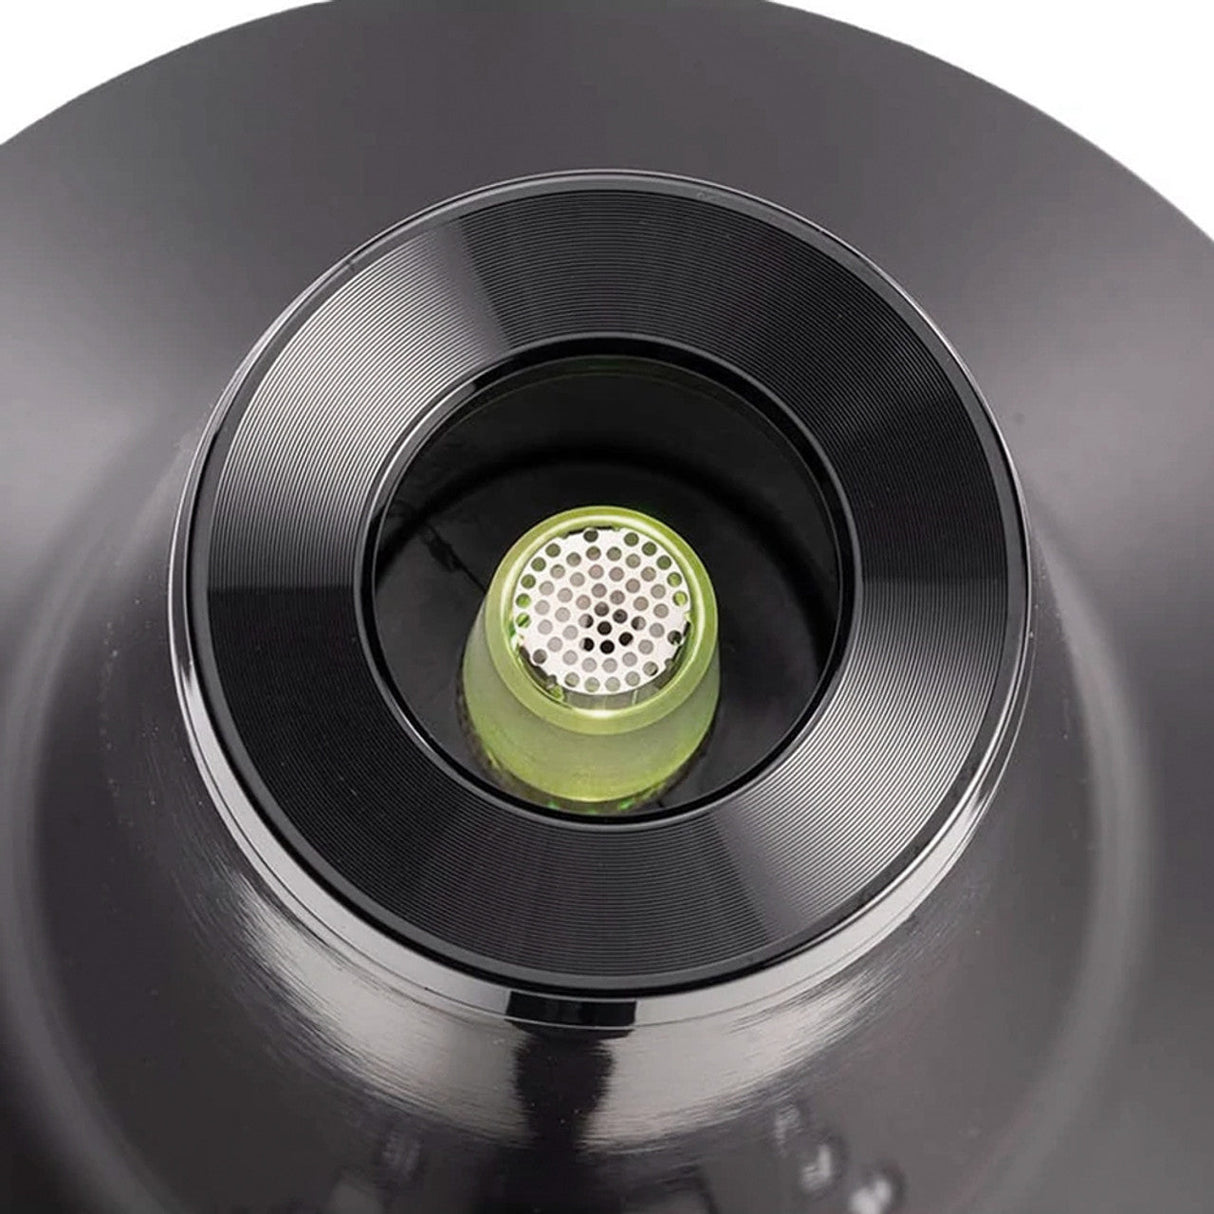 Arizer XQ2 Extreme Q v2 Vaporizer top view showing ceramic heating element